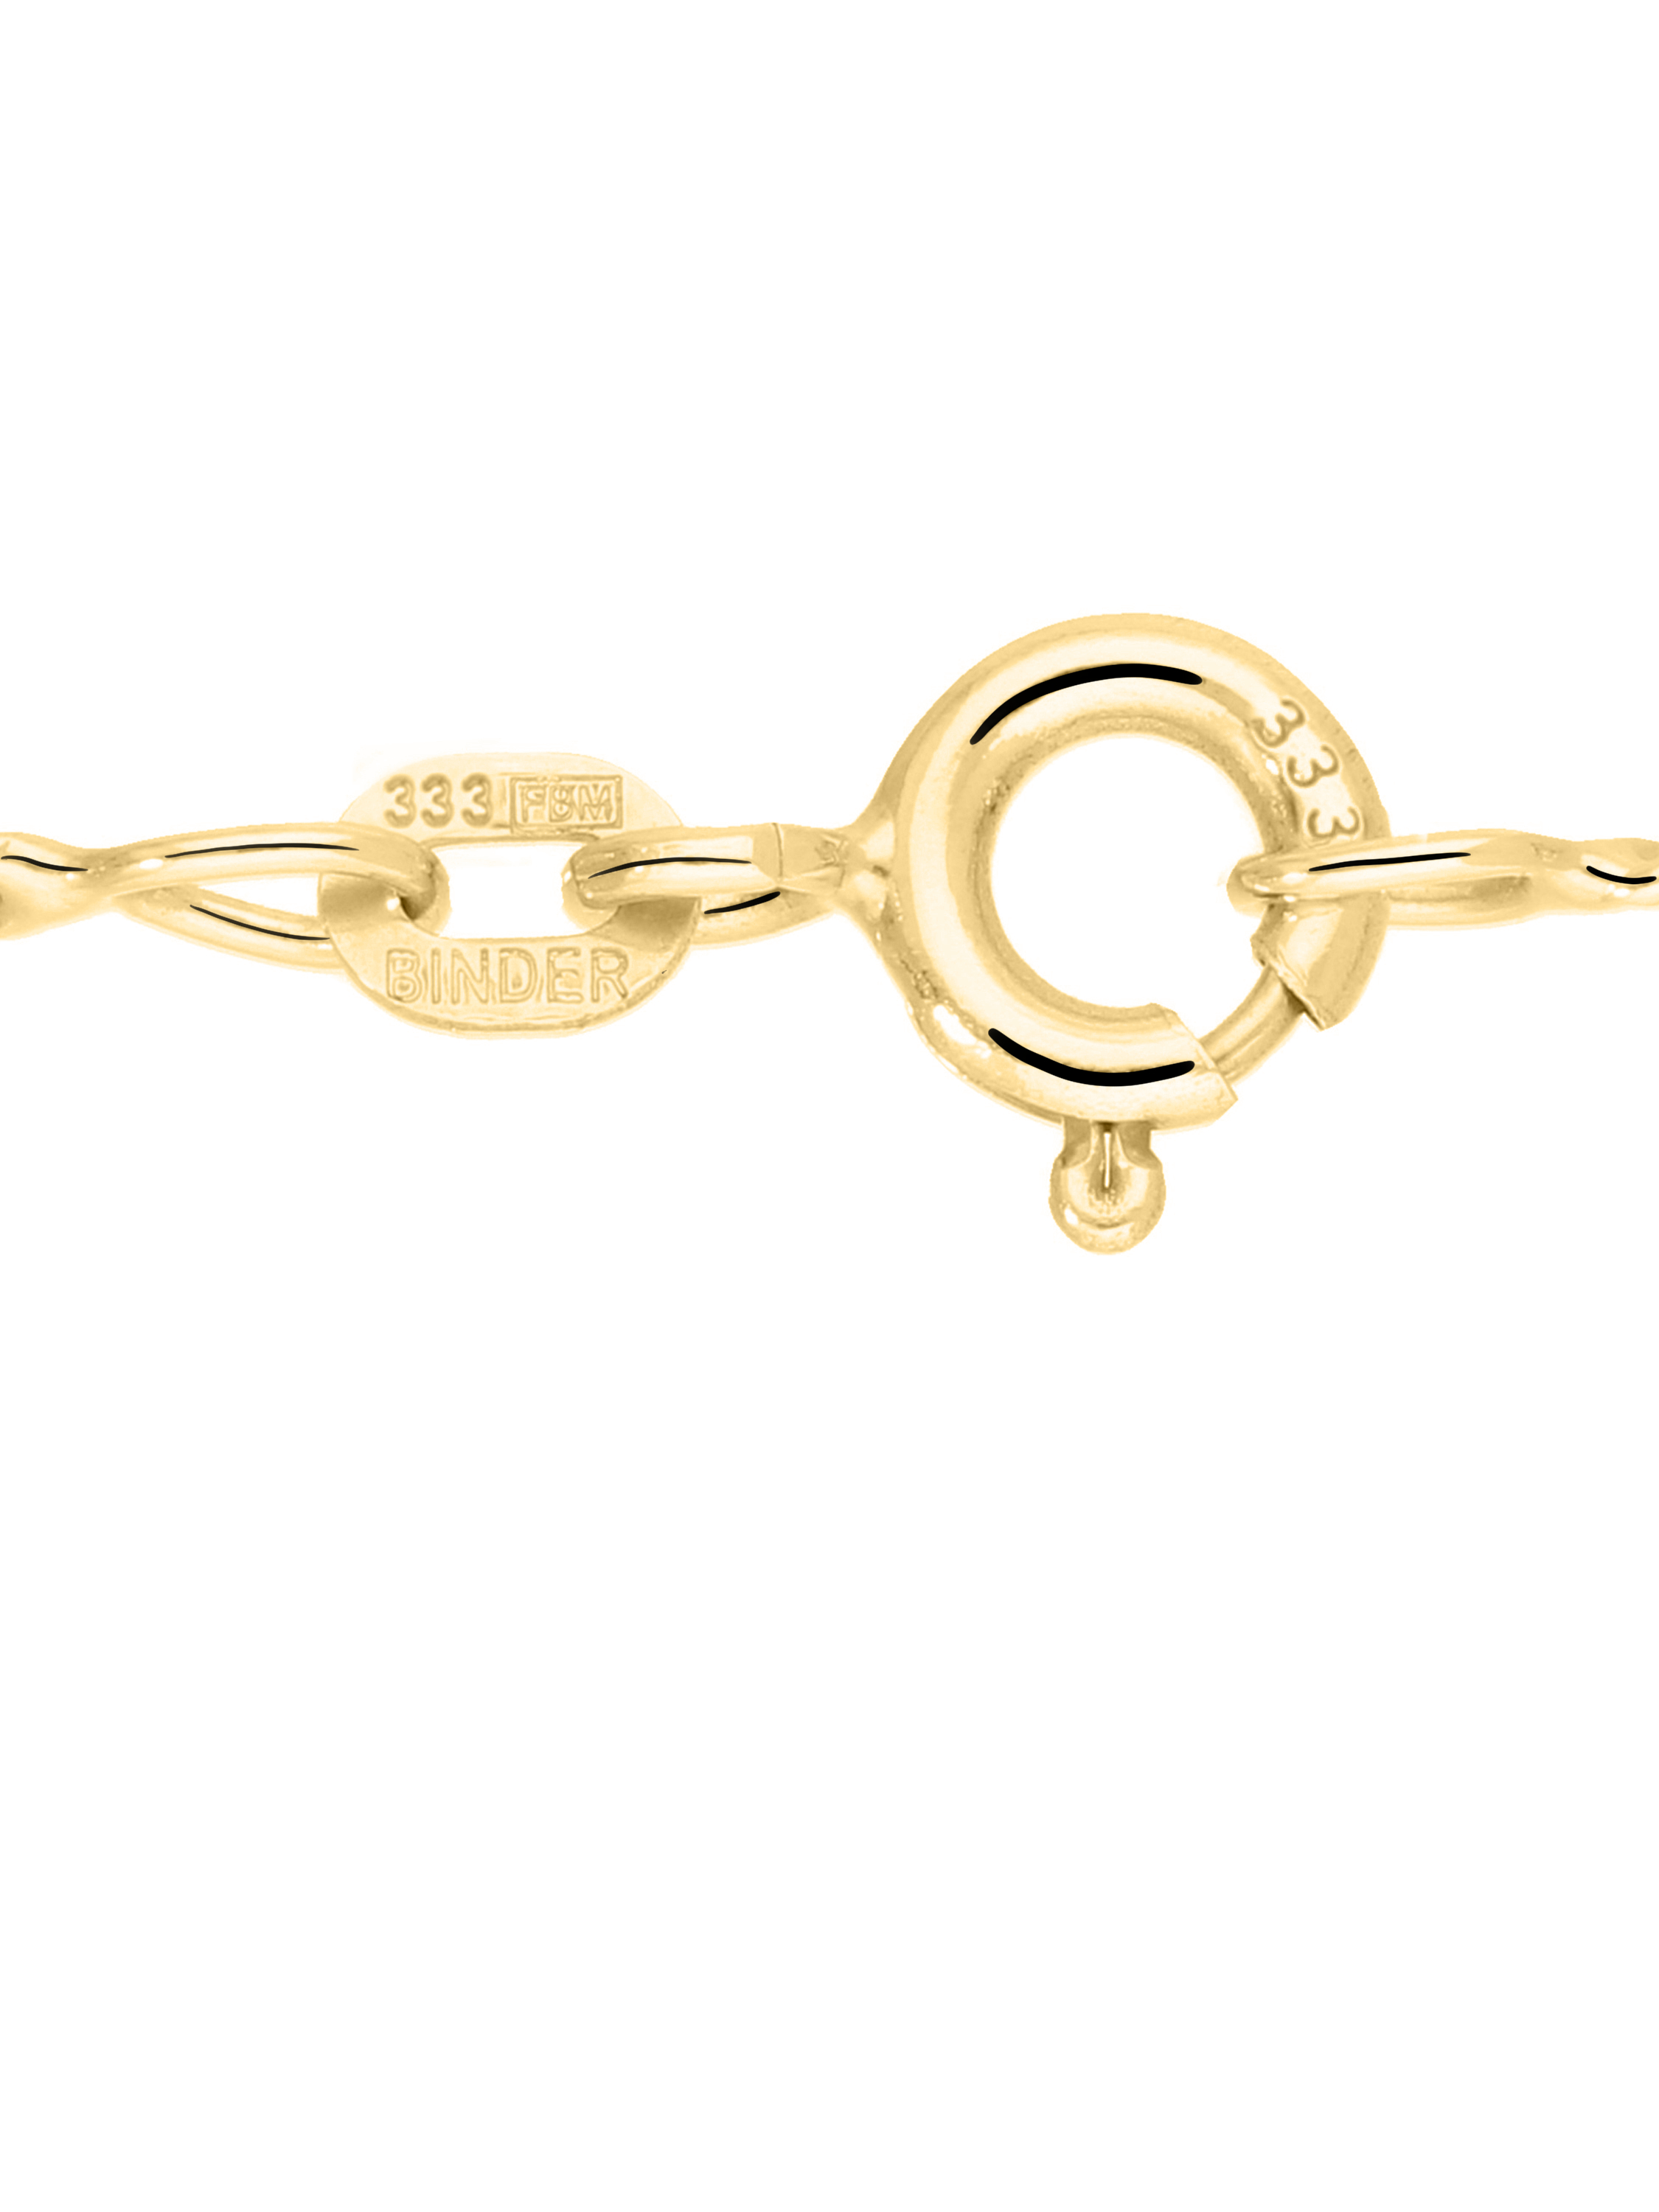 Anker Lite - Goldkette 333 Gelbgold Federring - Breite 0,8mm - 45 cm